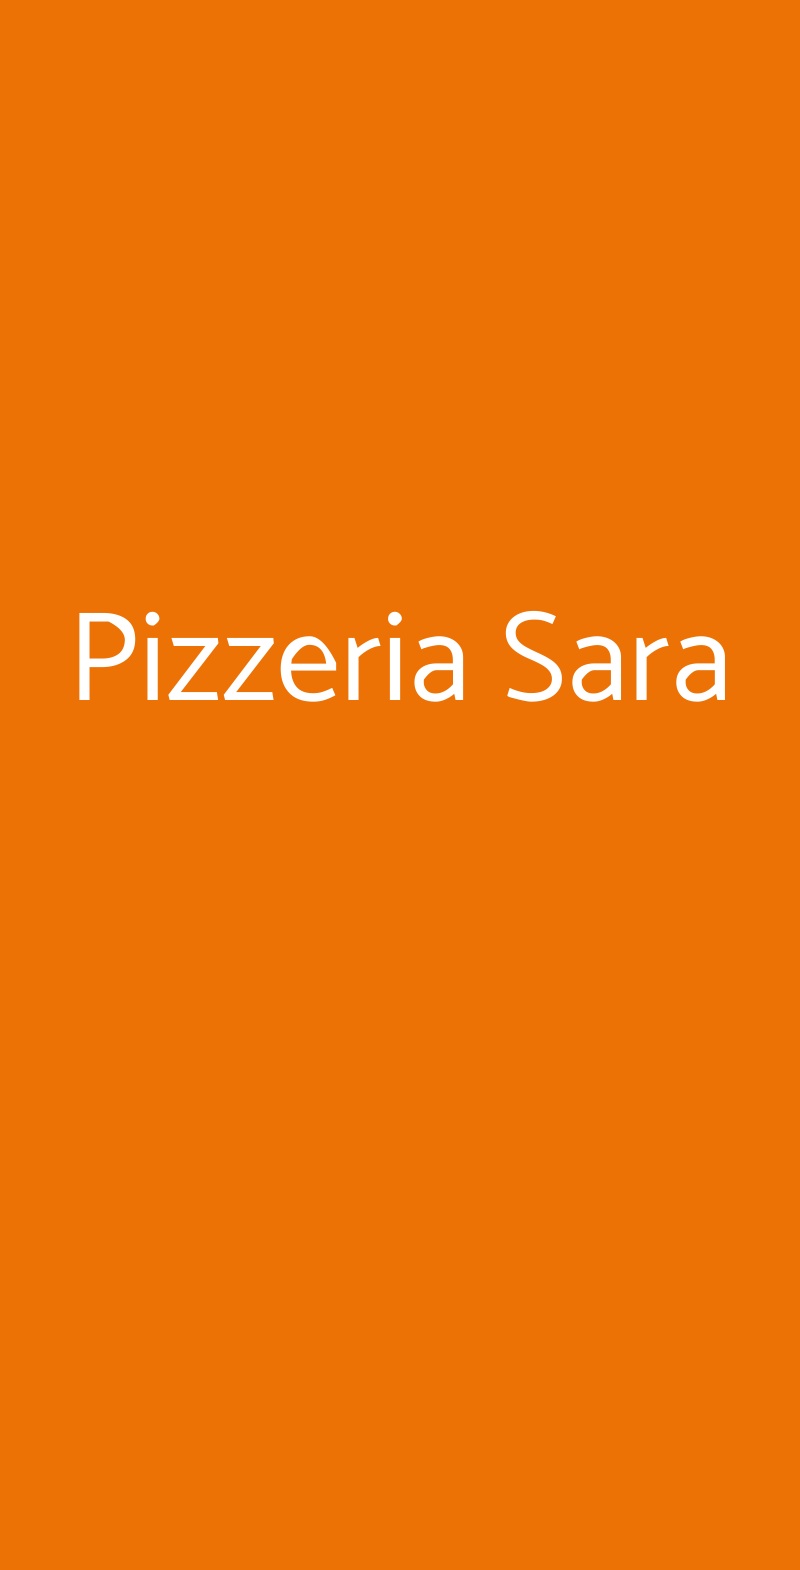 Pizzeria Sara Milano menù 1 pagina